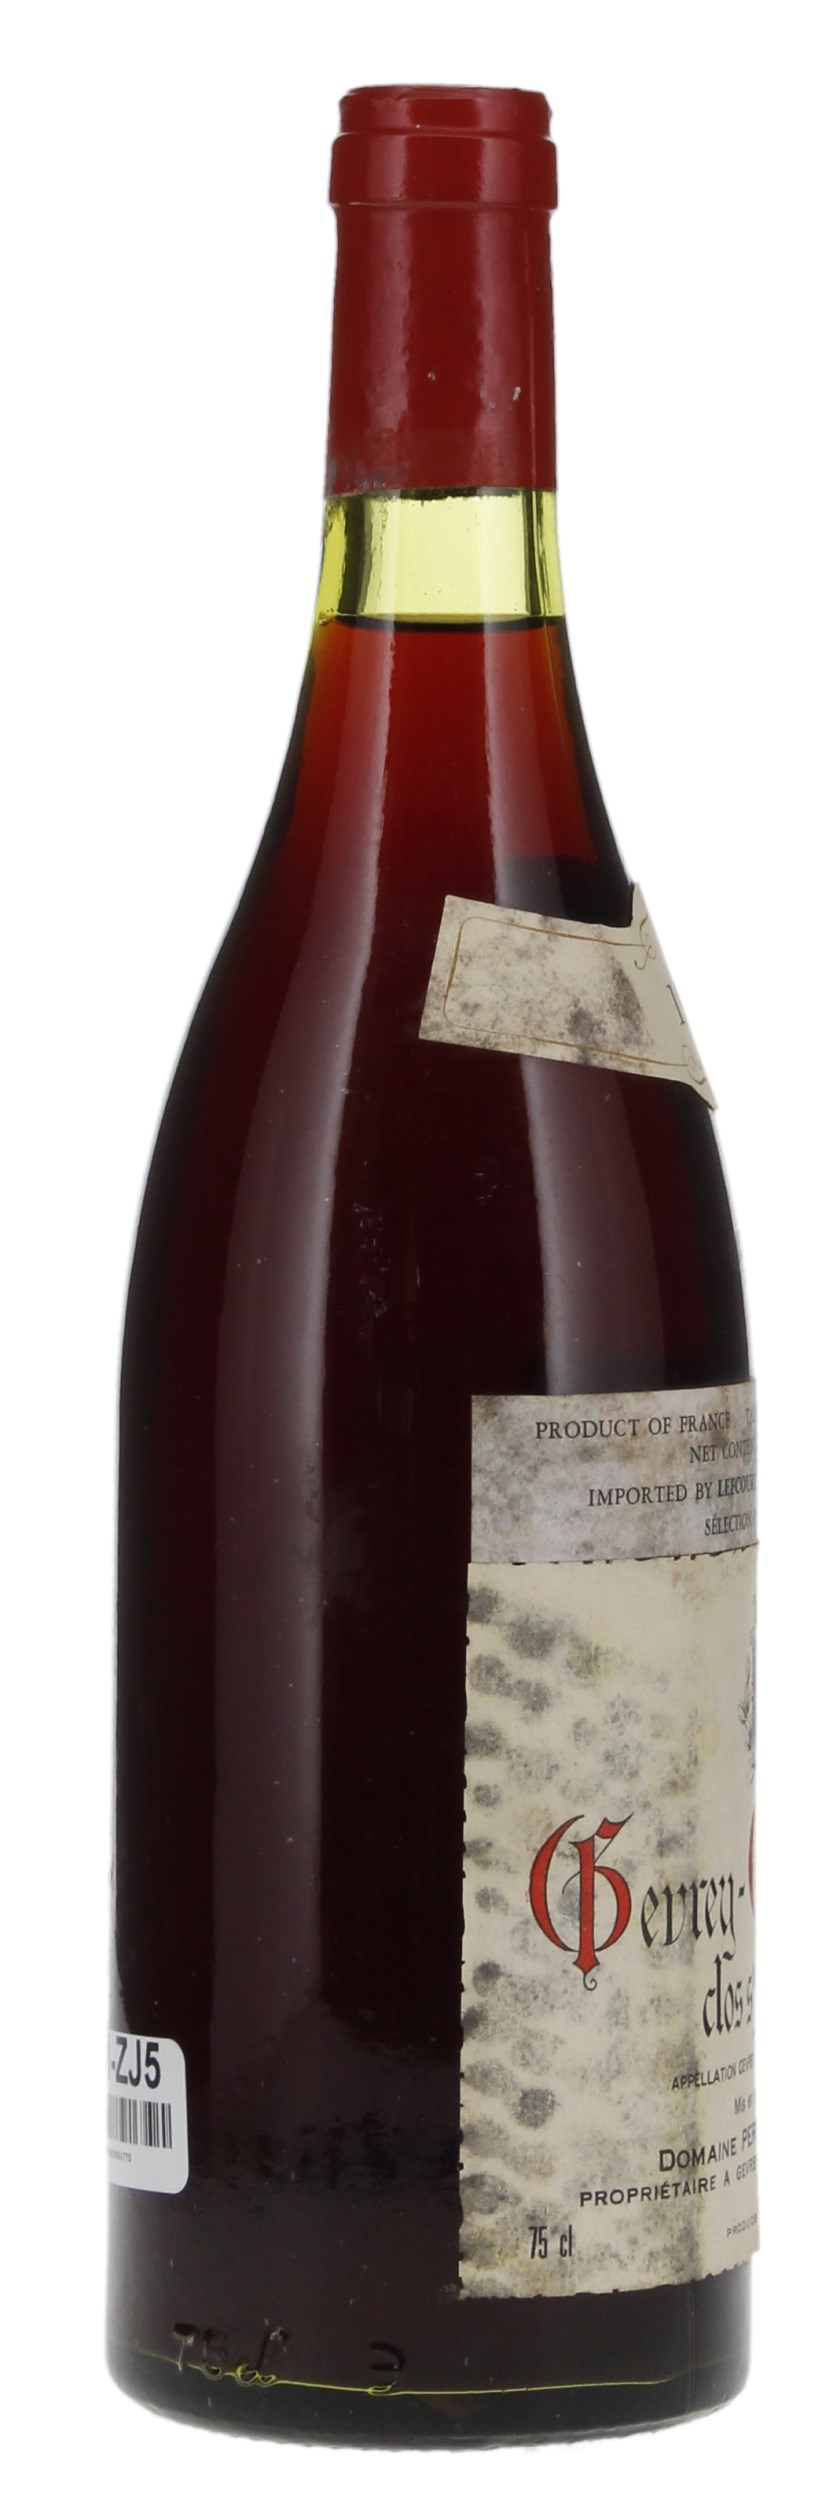 1976 Pernot-Fourrier Gevrey-Chambertin Clos St. Jacques, 750ml